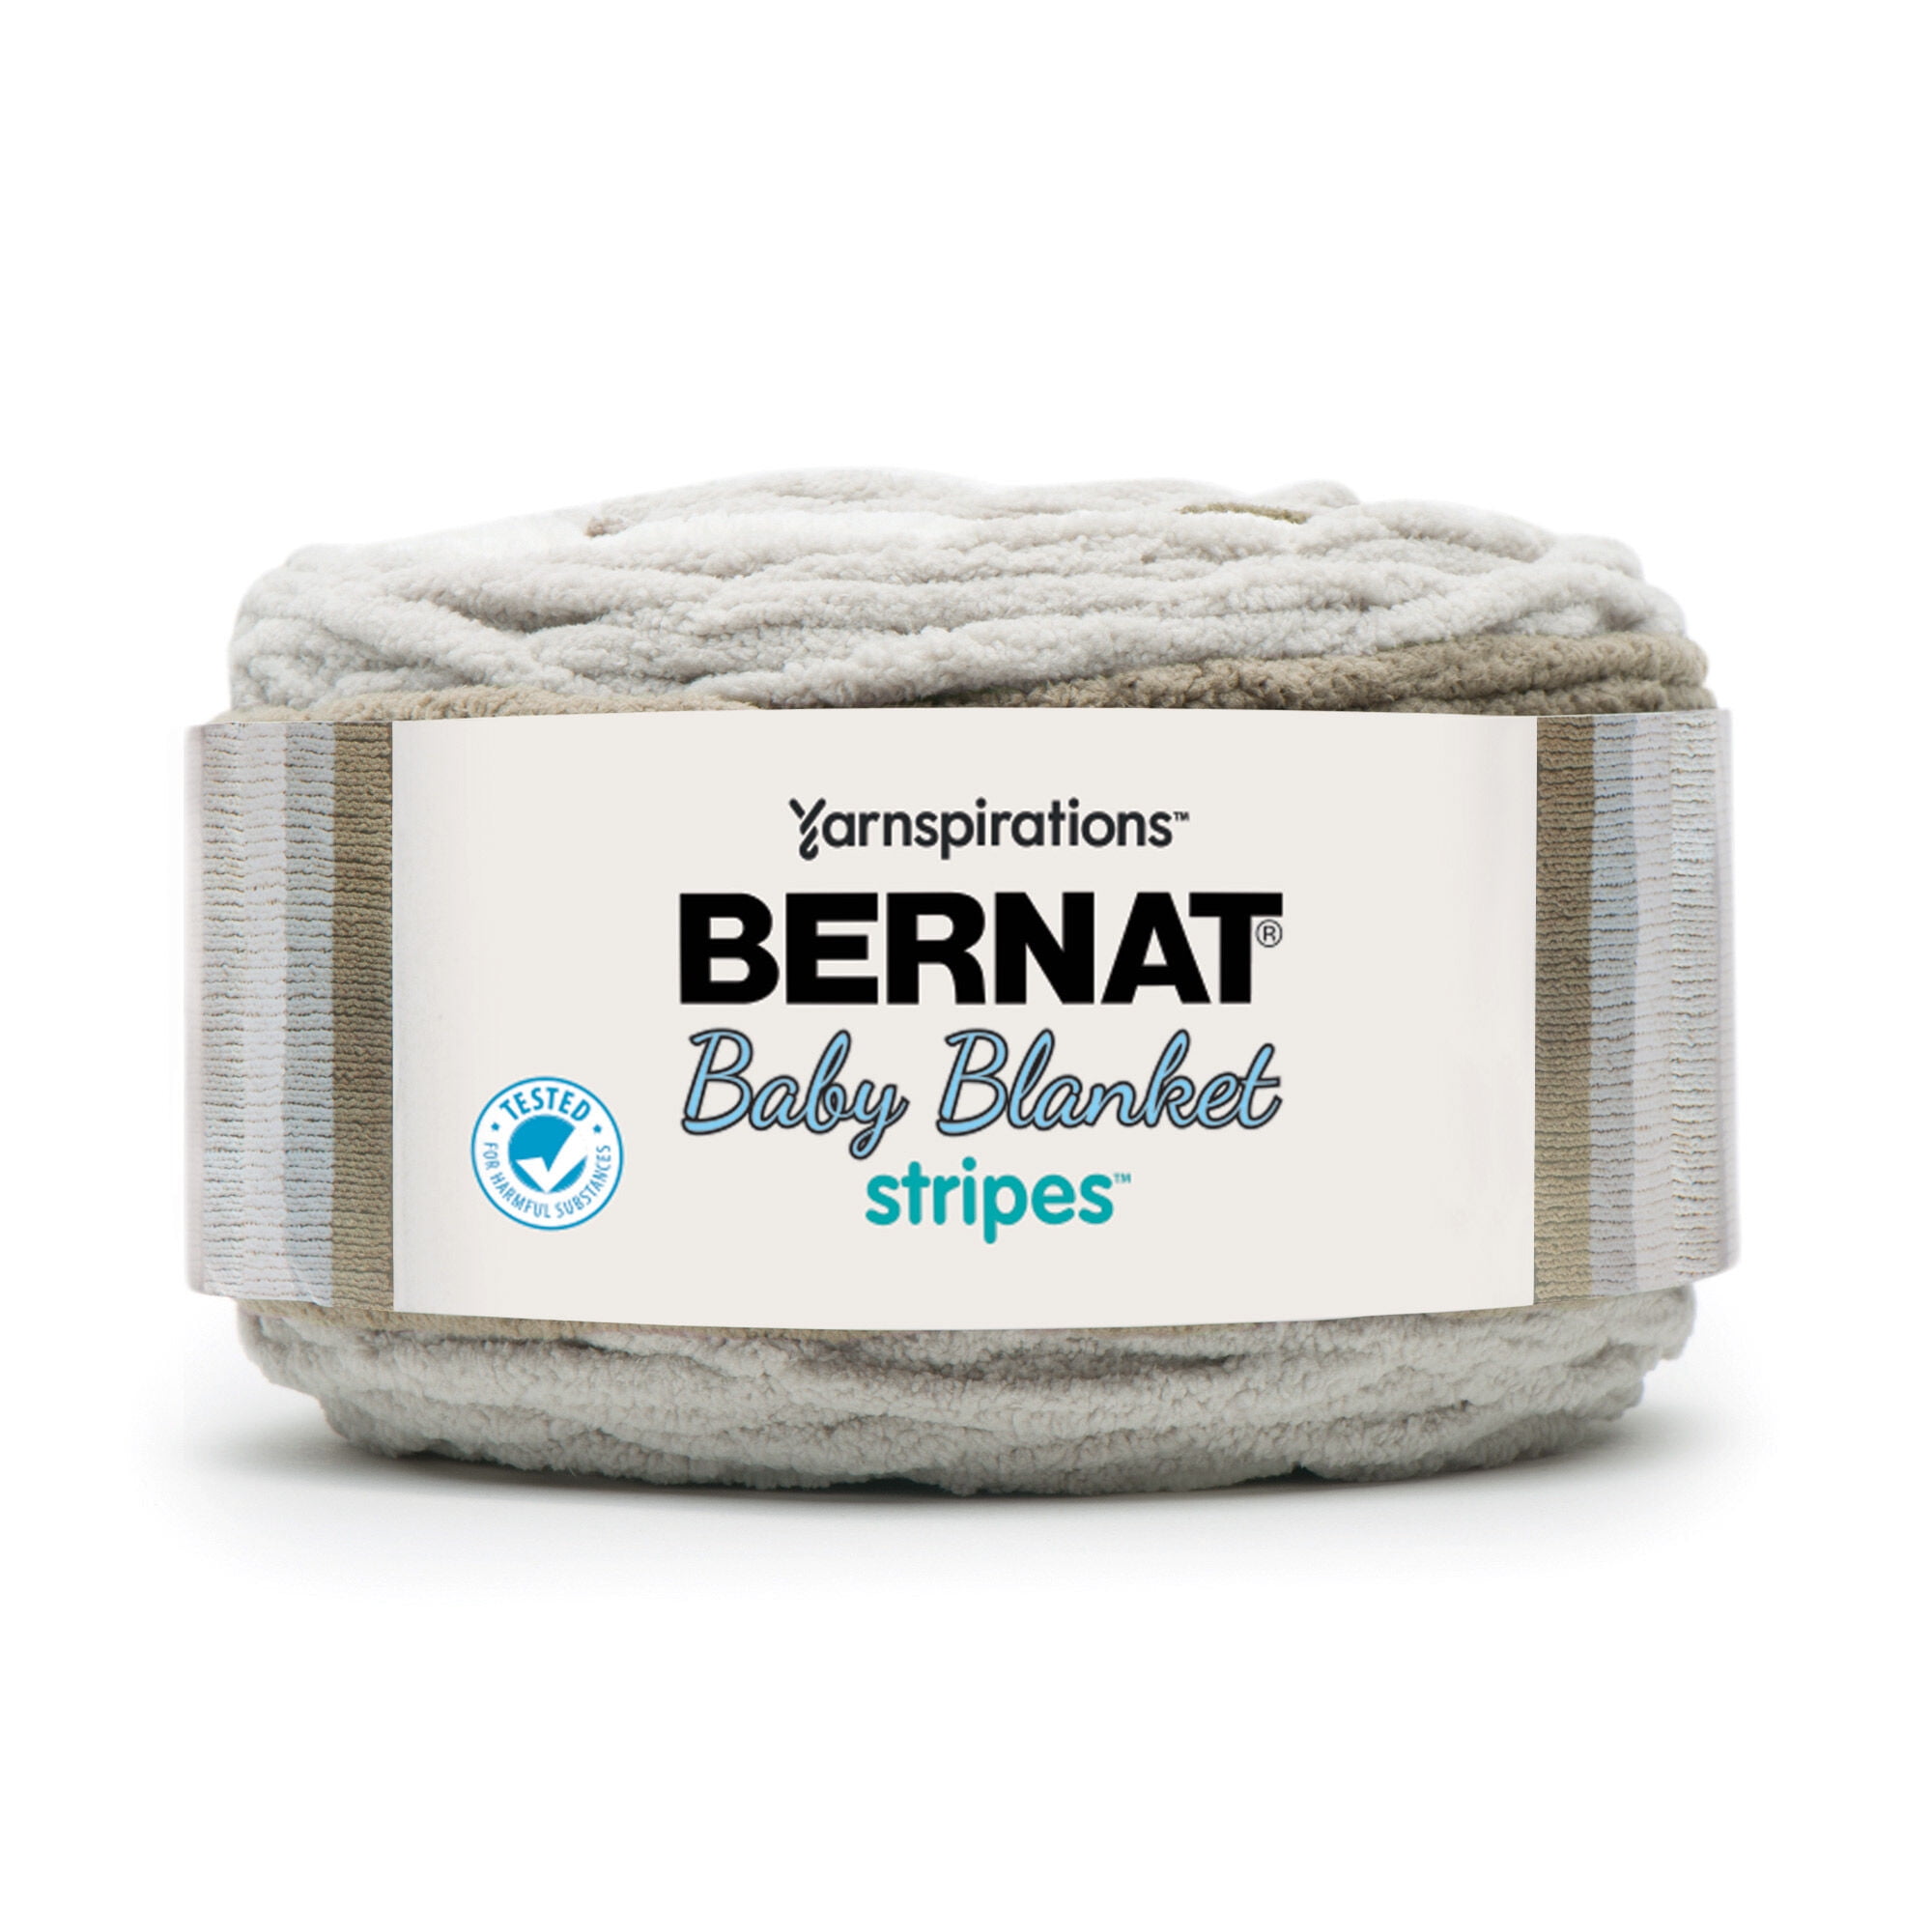 Bernat Baby Blanket Stripes Yarn-Sprouts, 1 count - Kroger